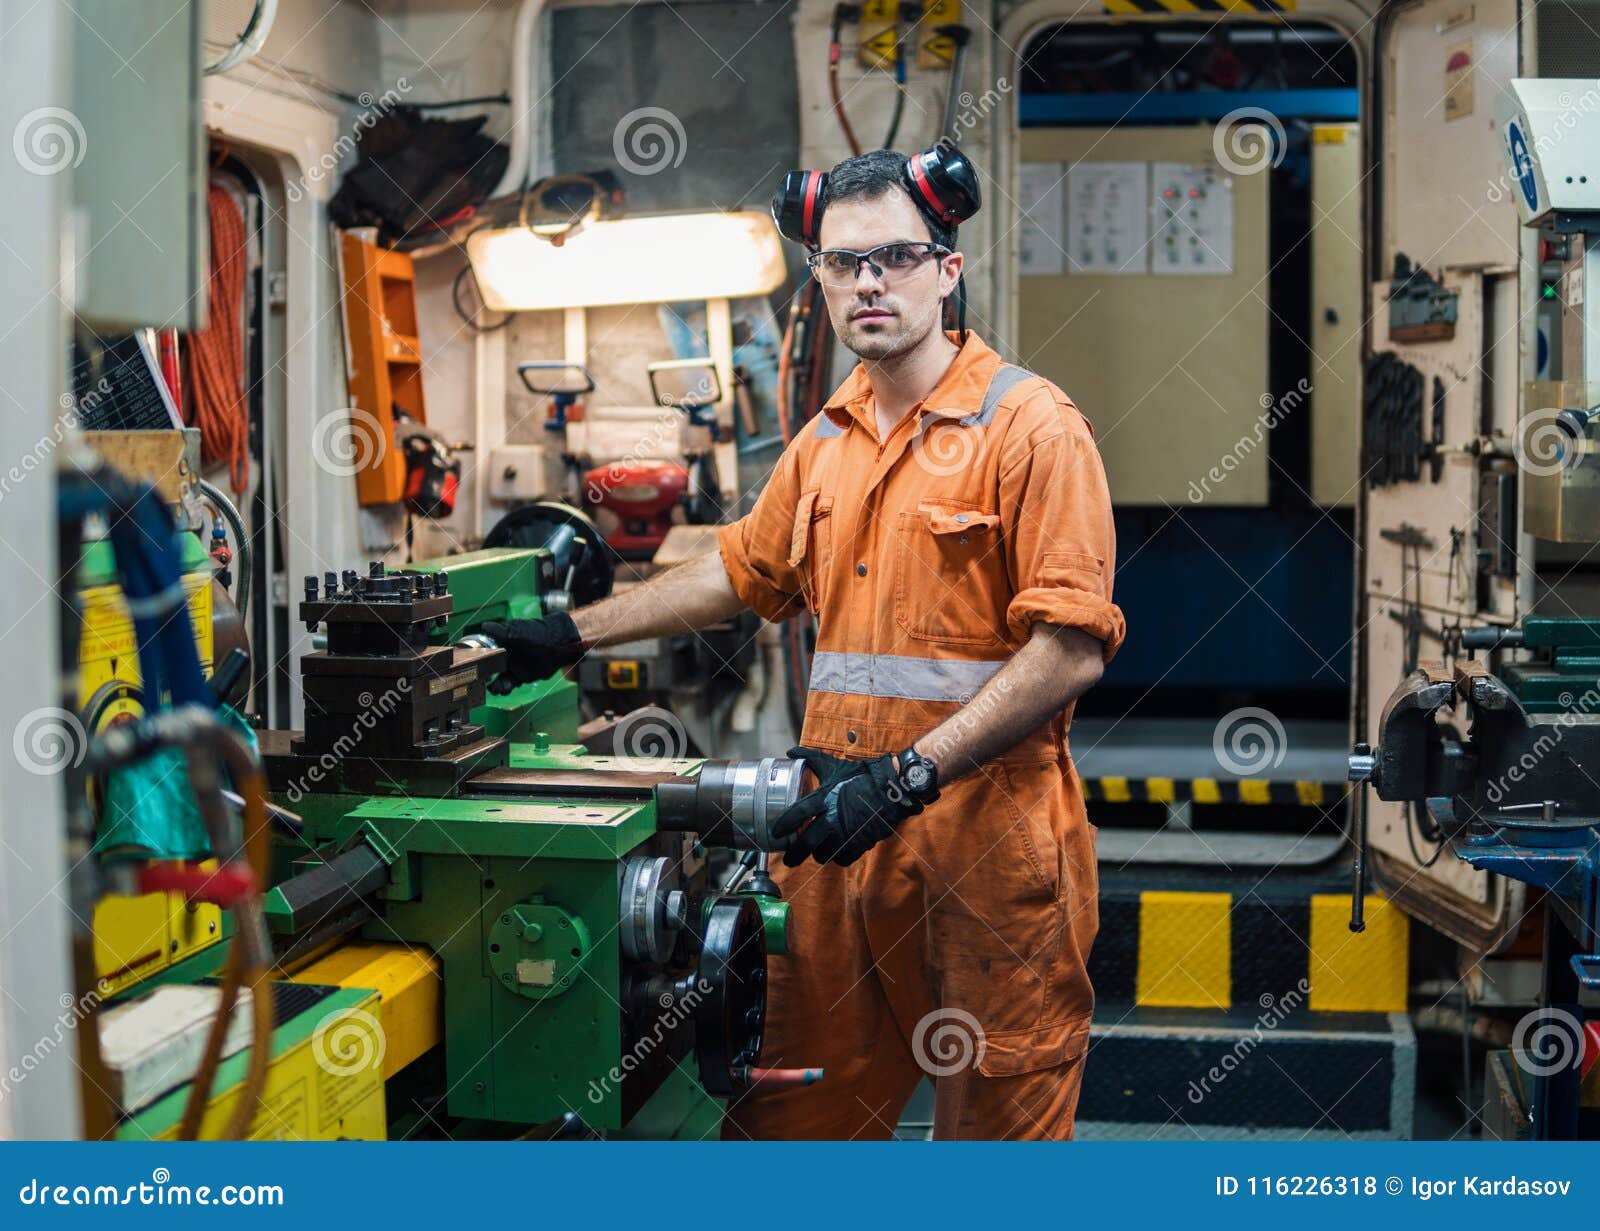 Mechanical engineering jobs at sea